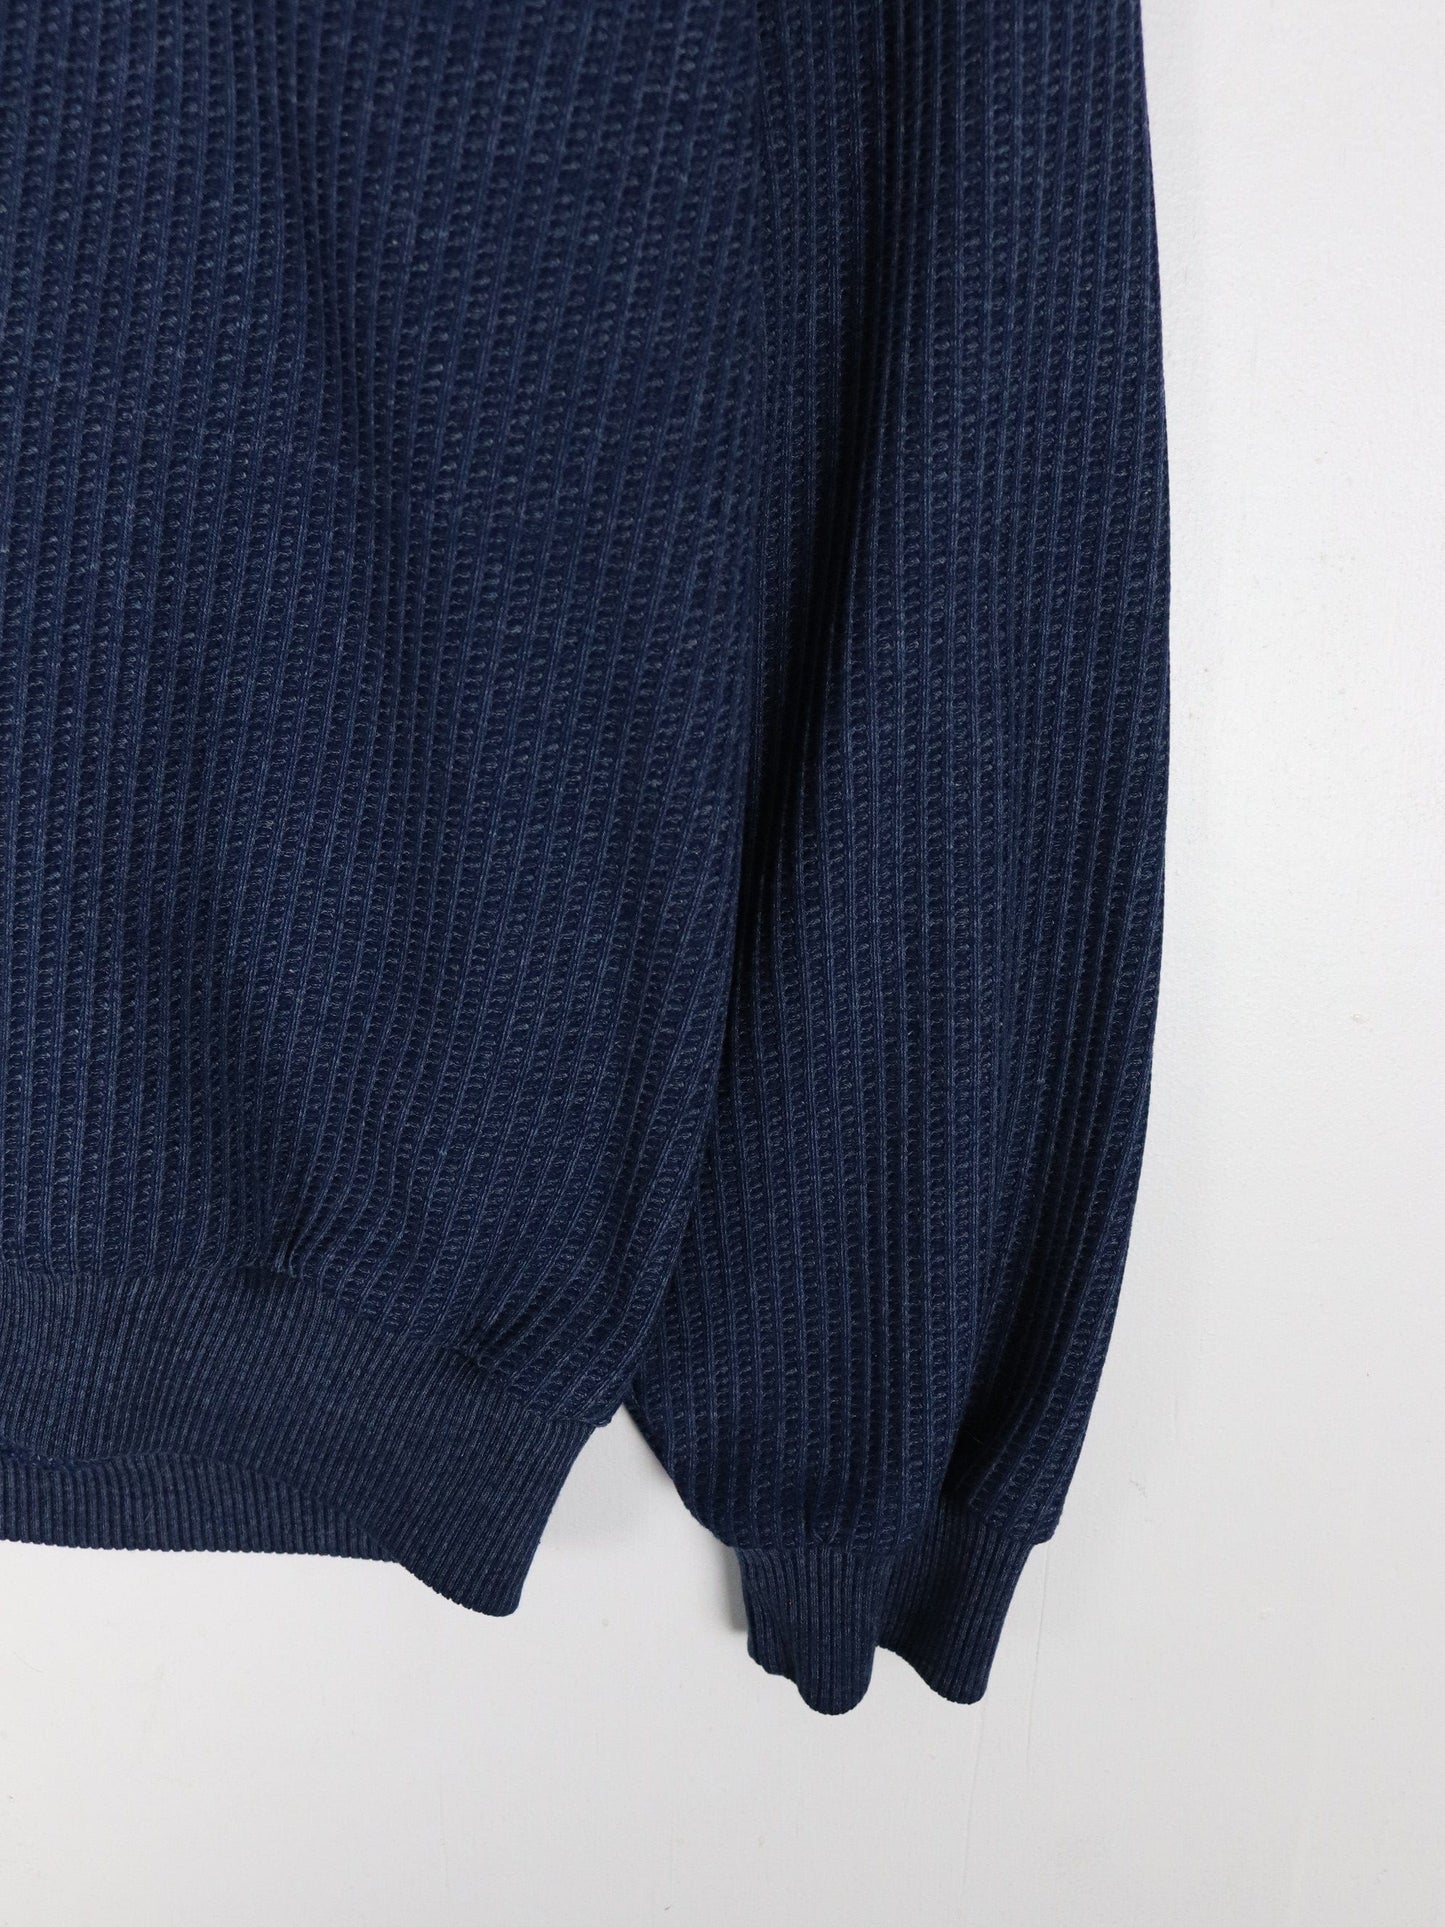 Other Knitwear Vintage Knights Bridge Sweater Mens Medium Blue Quarter Zip